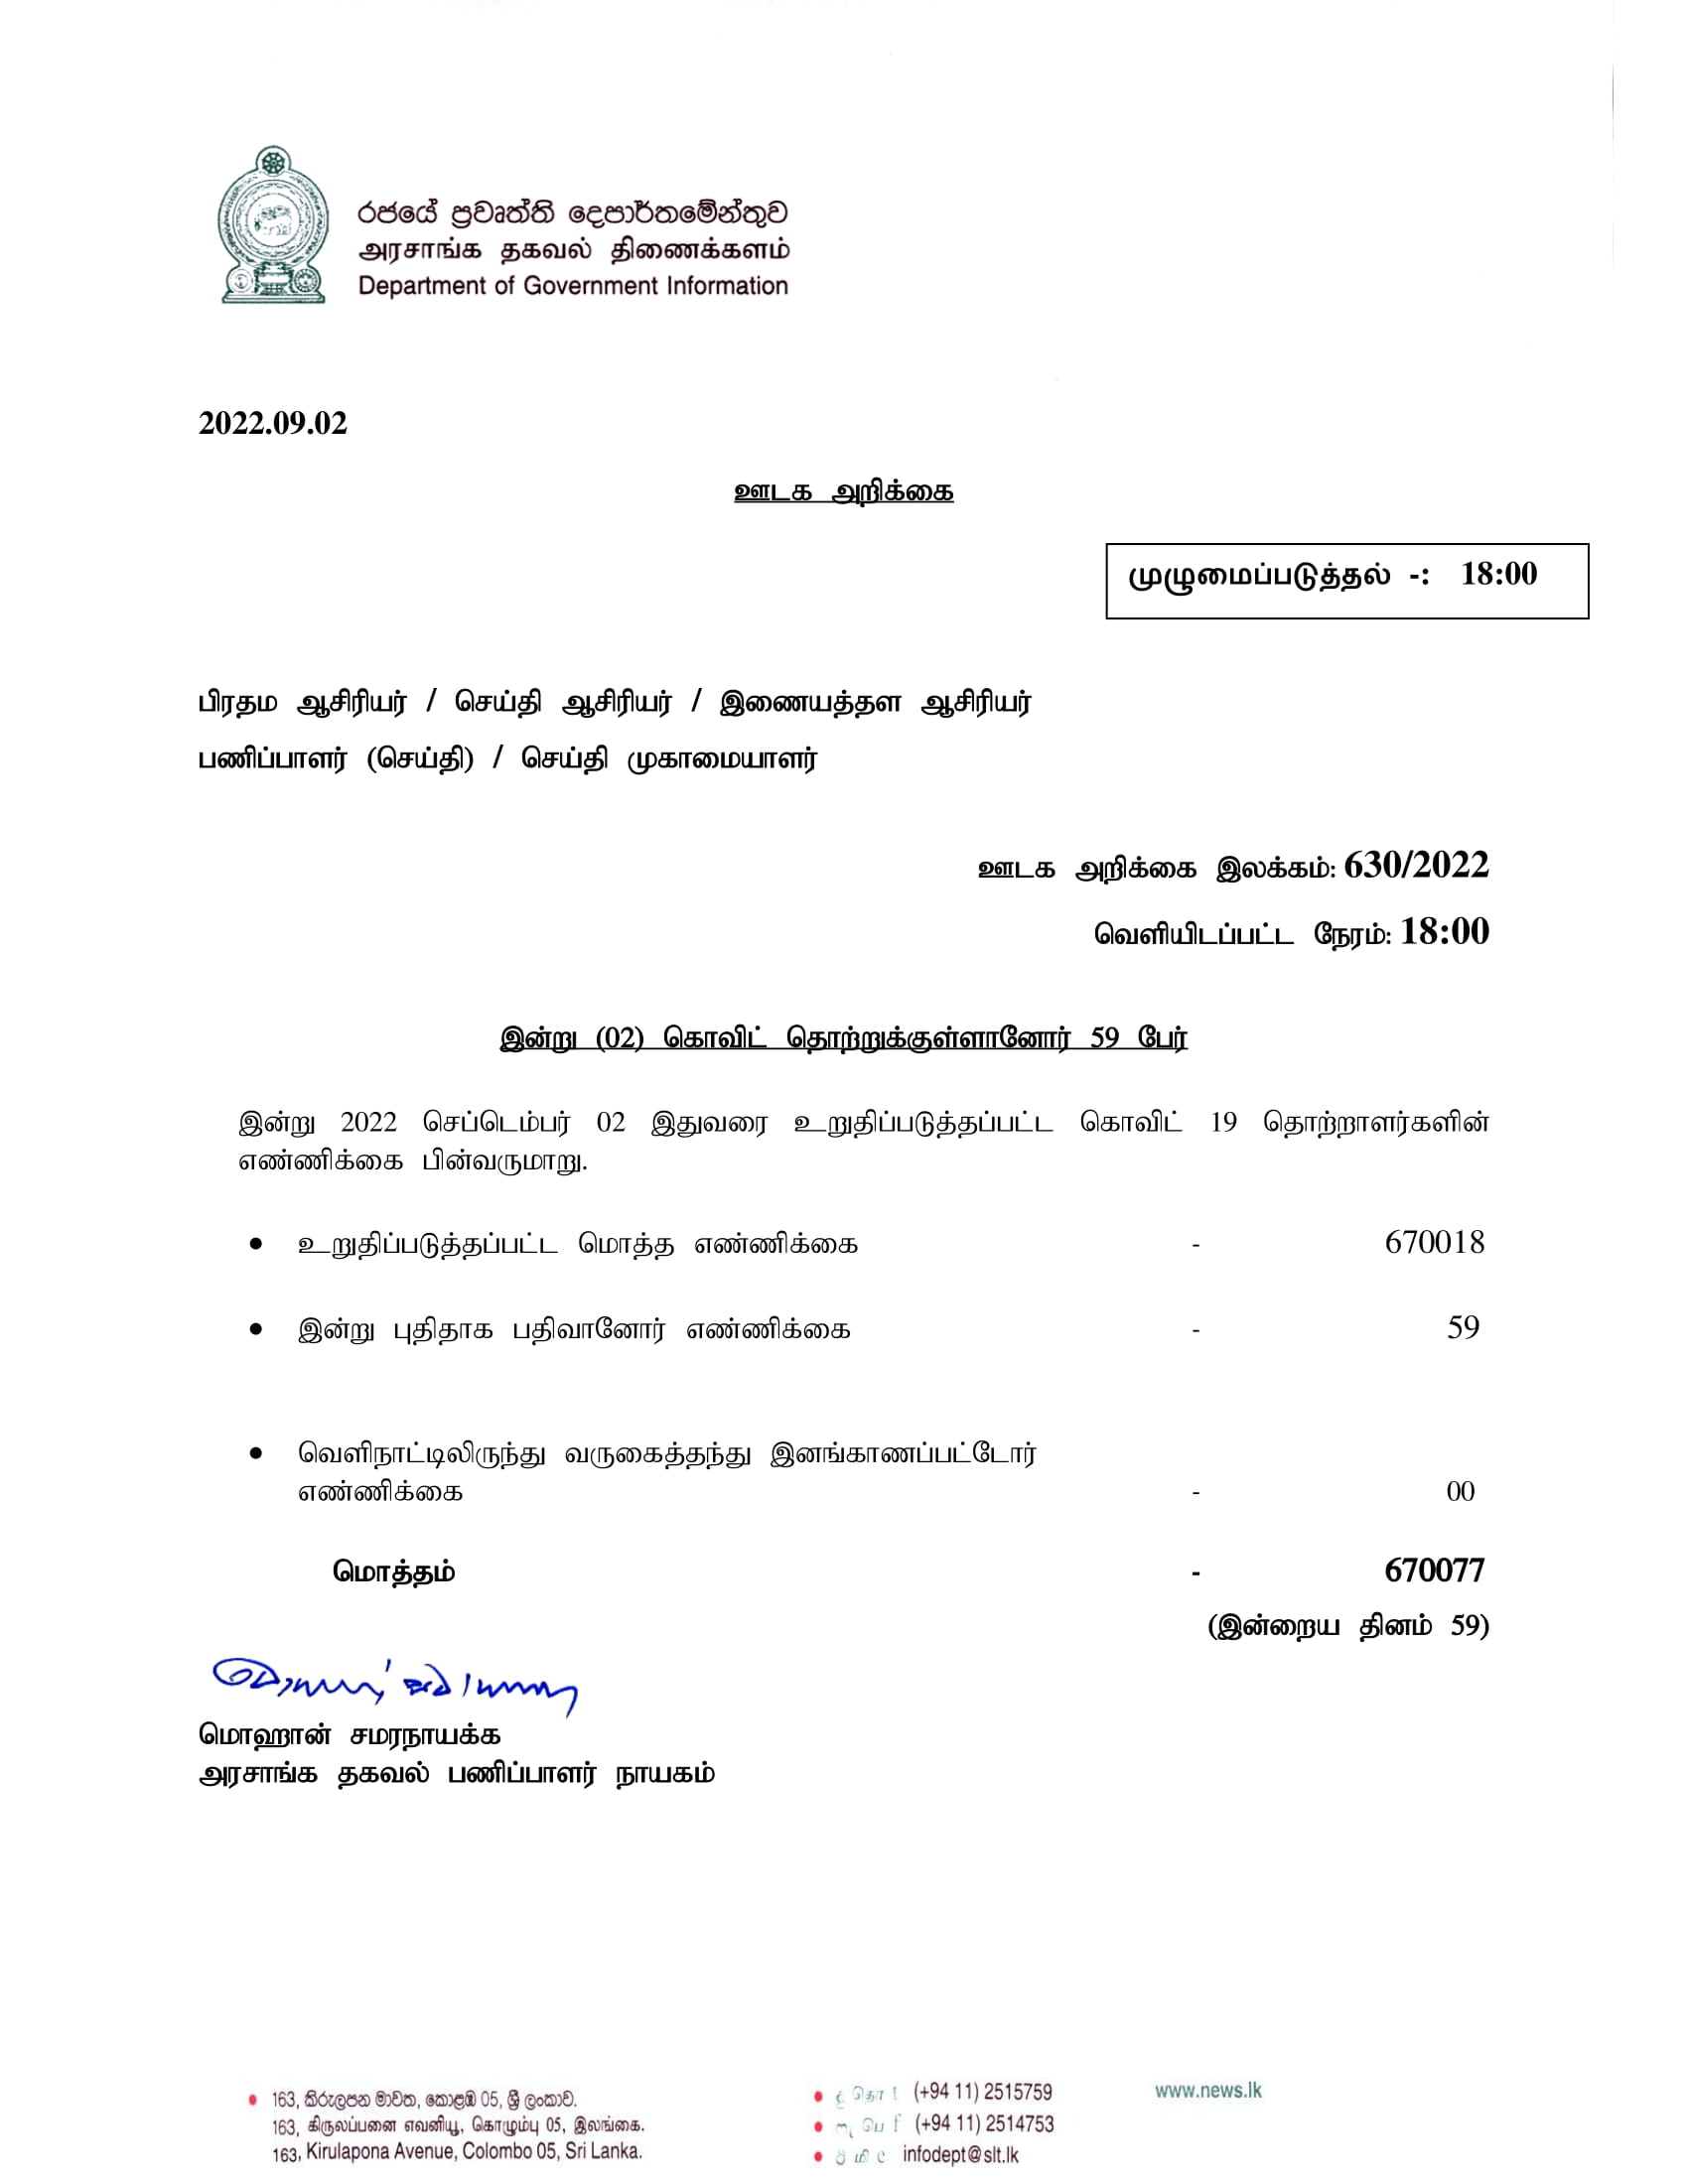 Press Release 630 Tamil 1 1